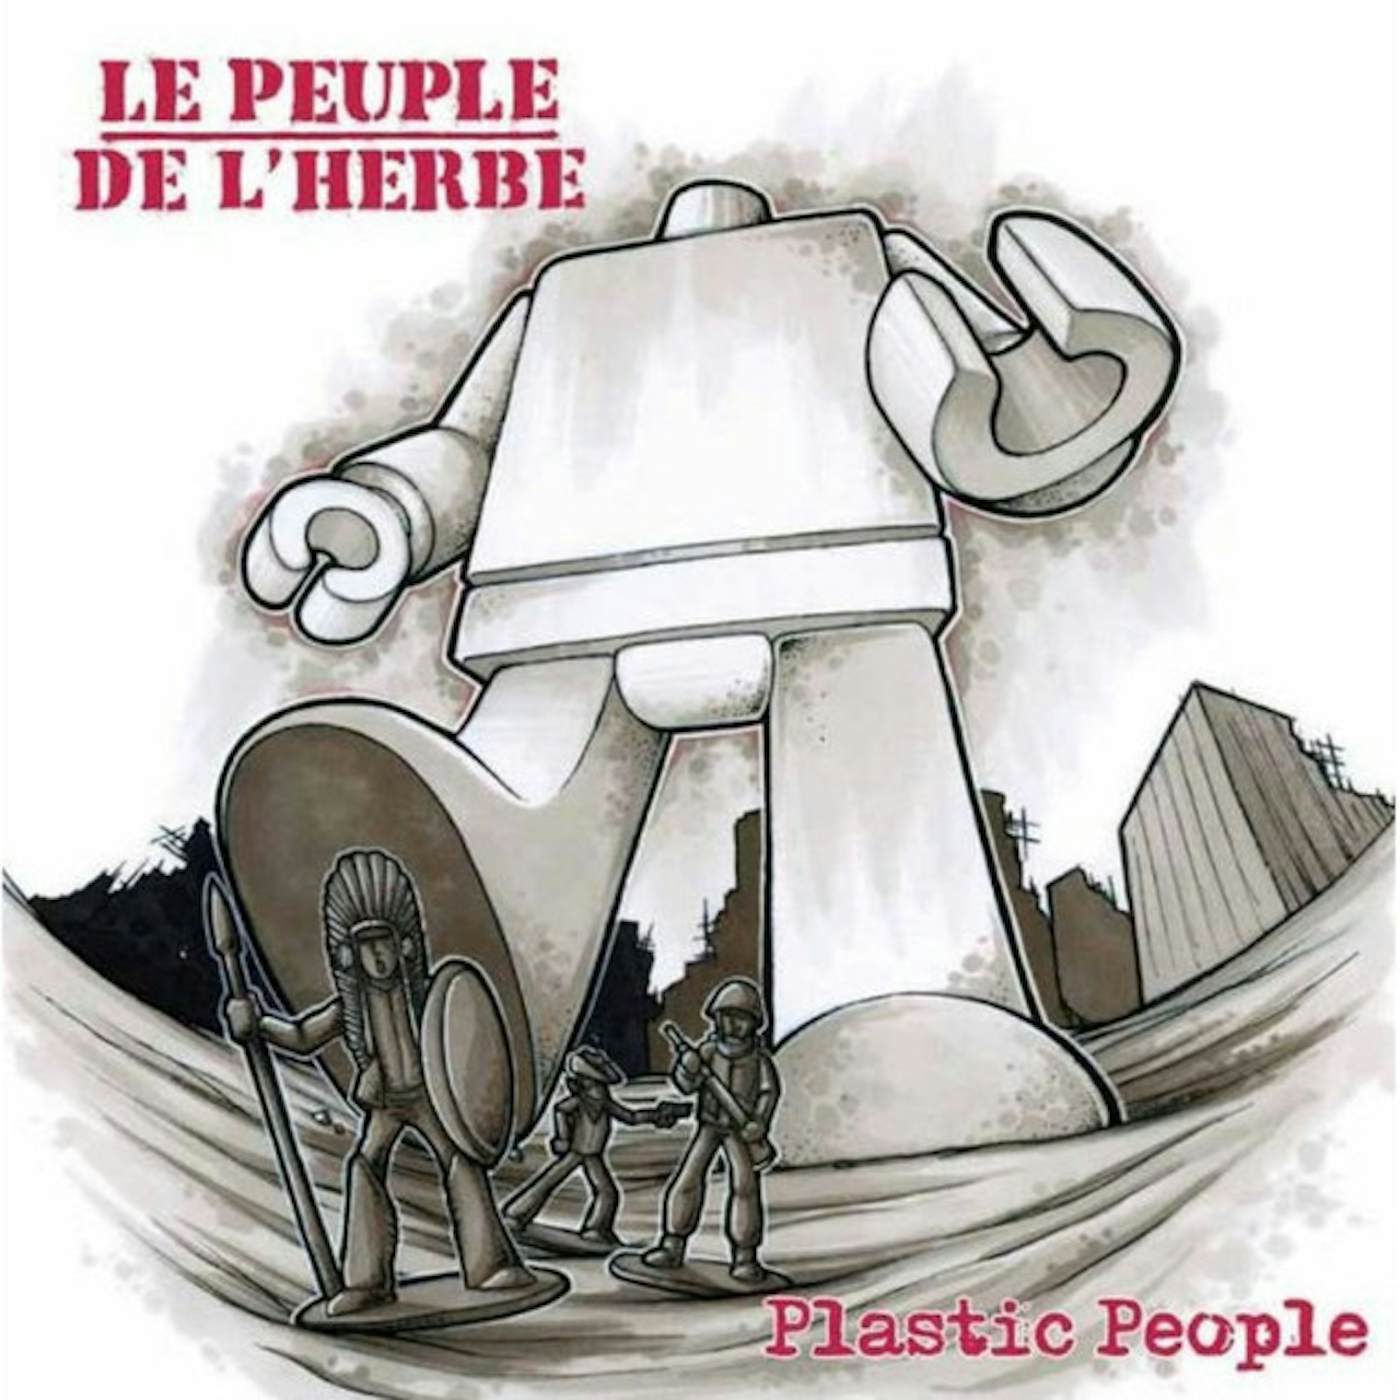 Le Peuple de L'Herbe PLASTIC PEOPLE (FRA) Vinyl Record